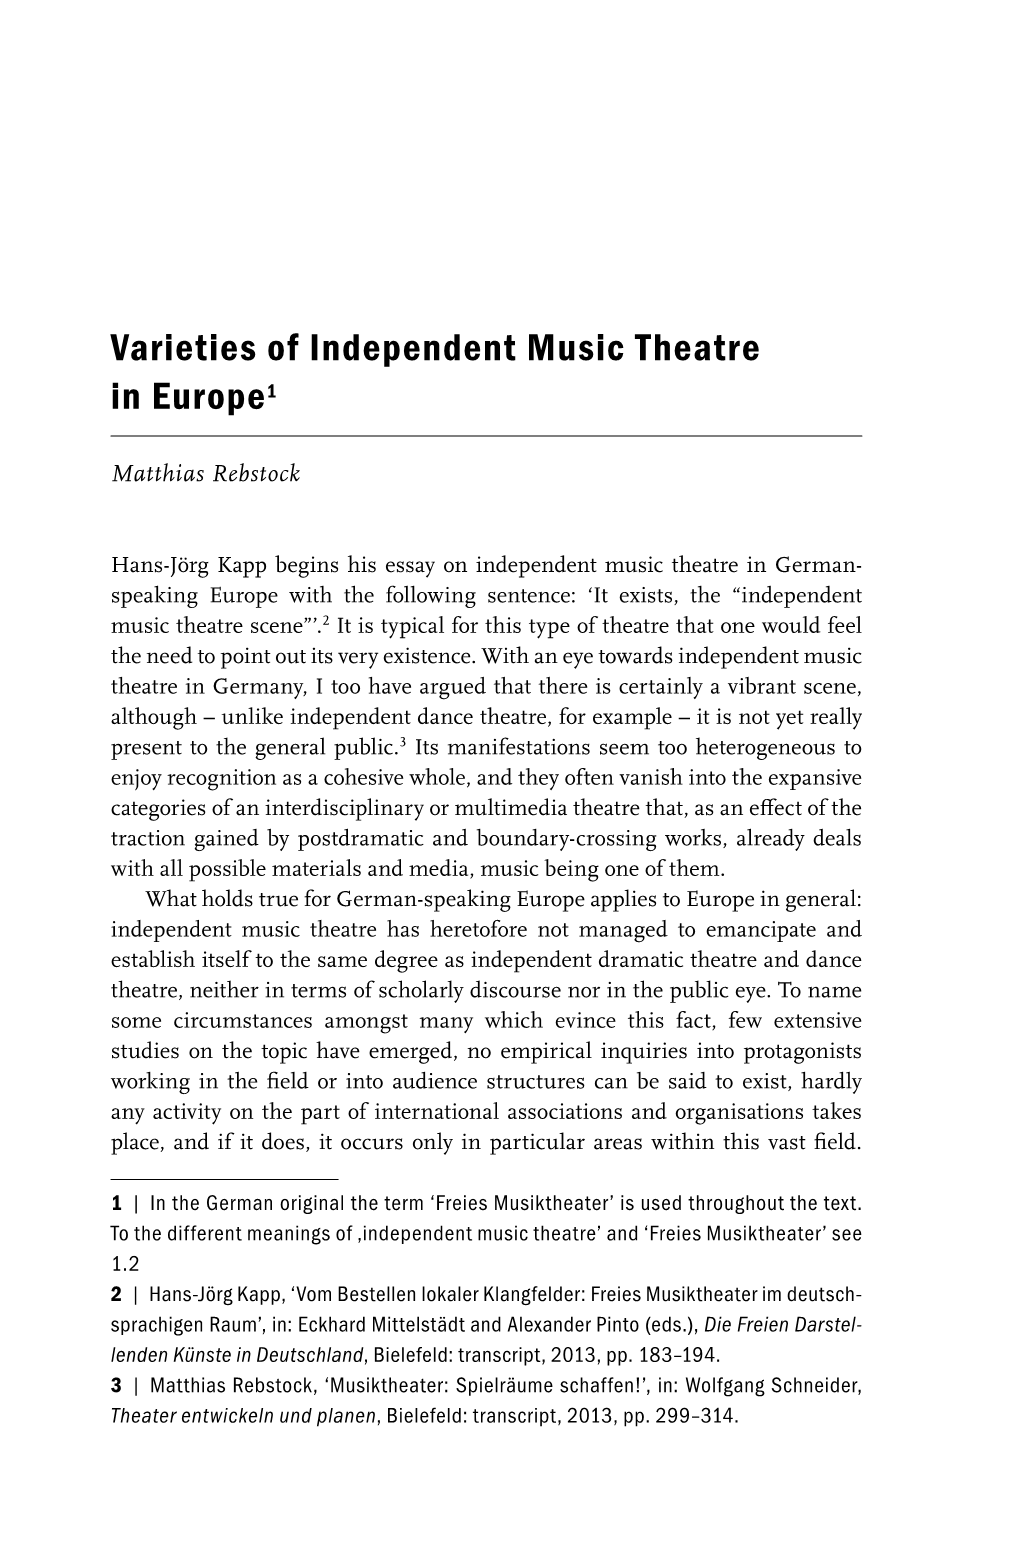 Varieties of Independent Music Theatre in Europe1